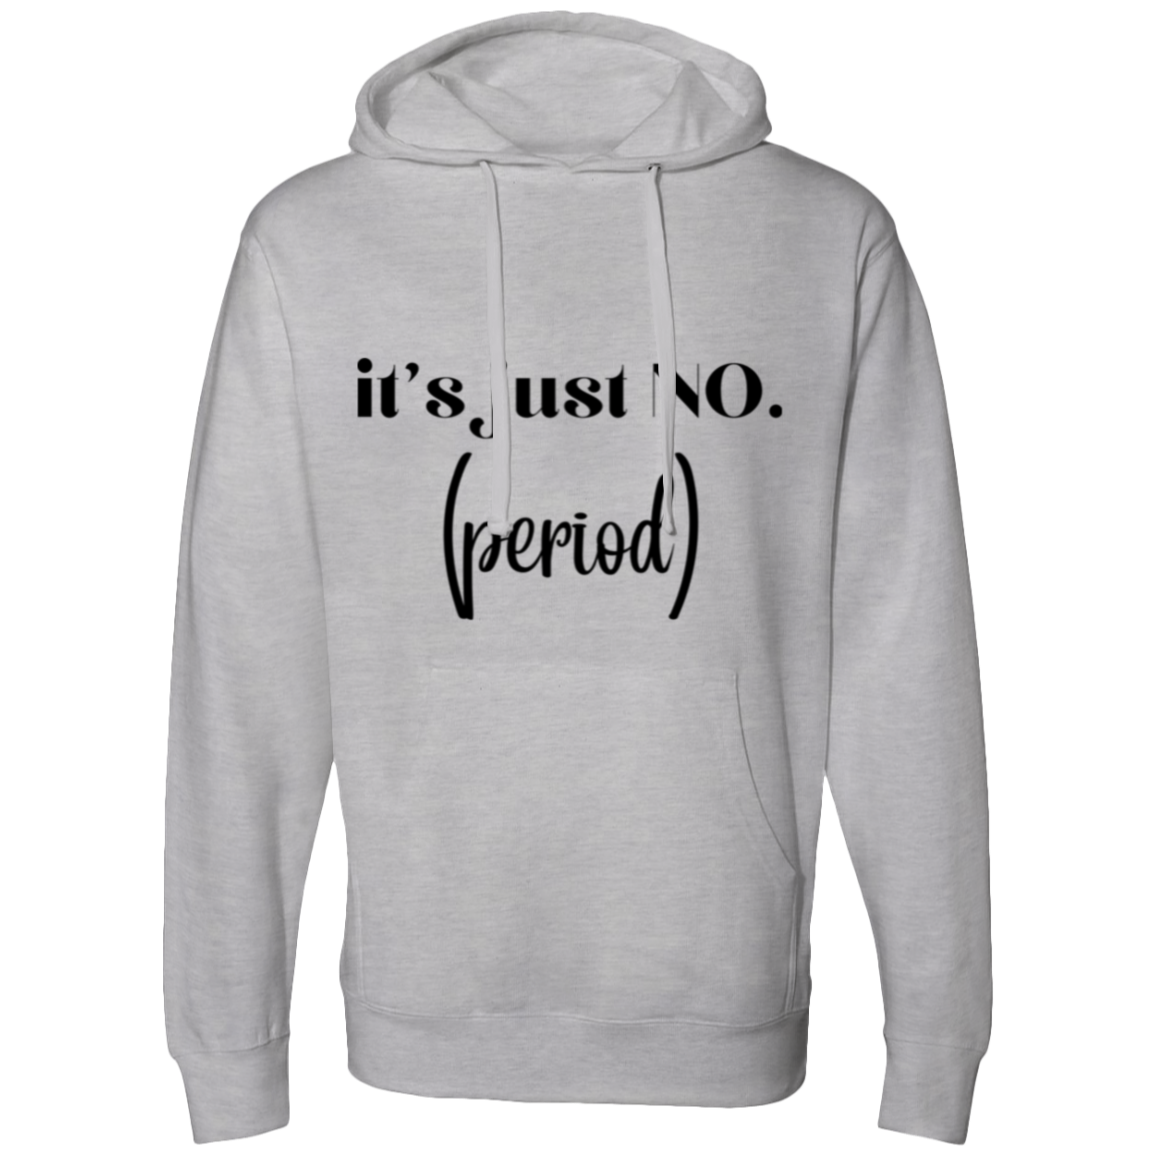 it's just no.(period)Hooded Sweatshirt